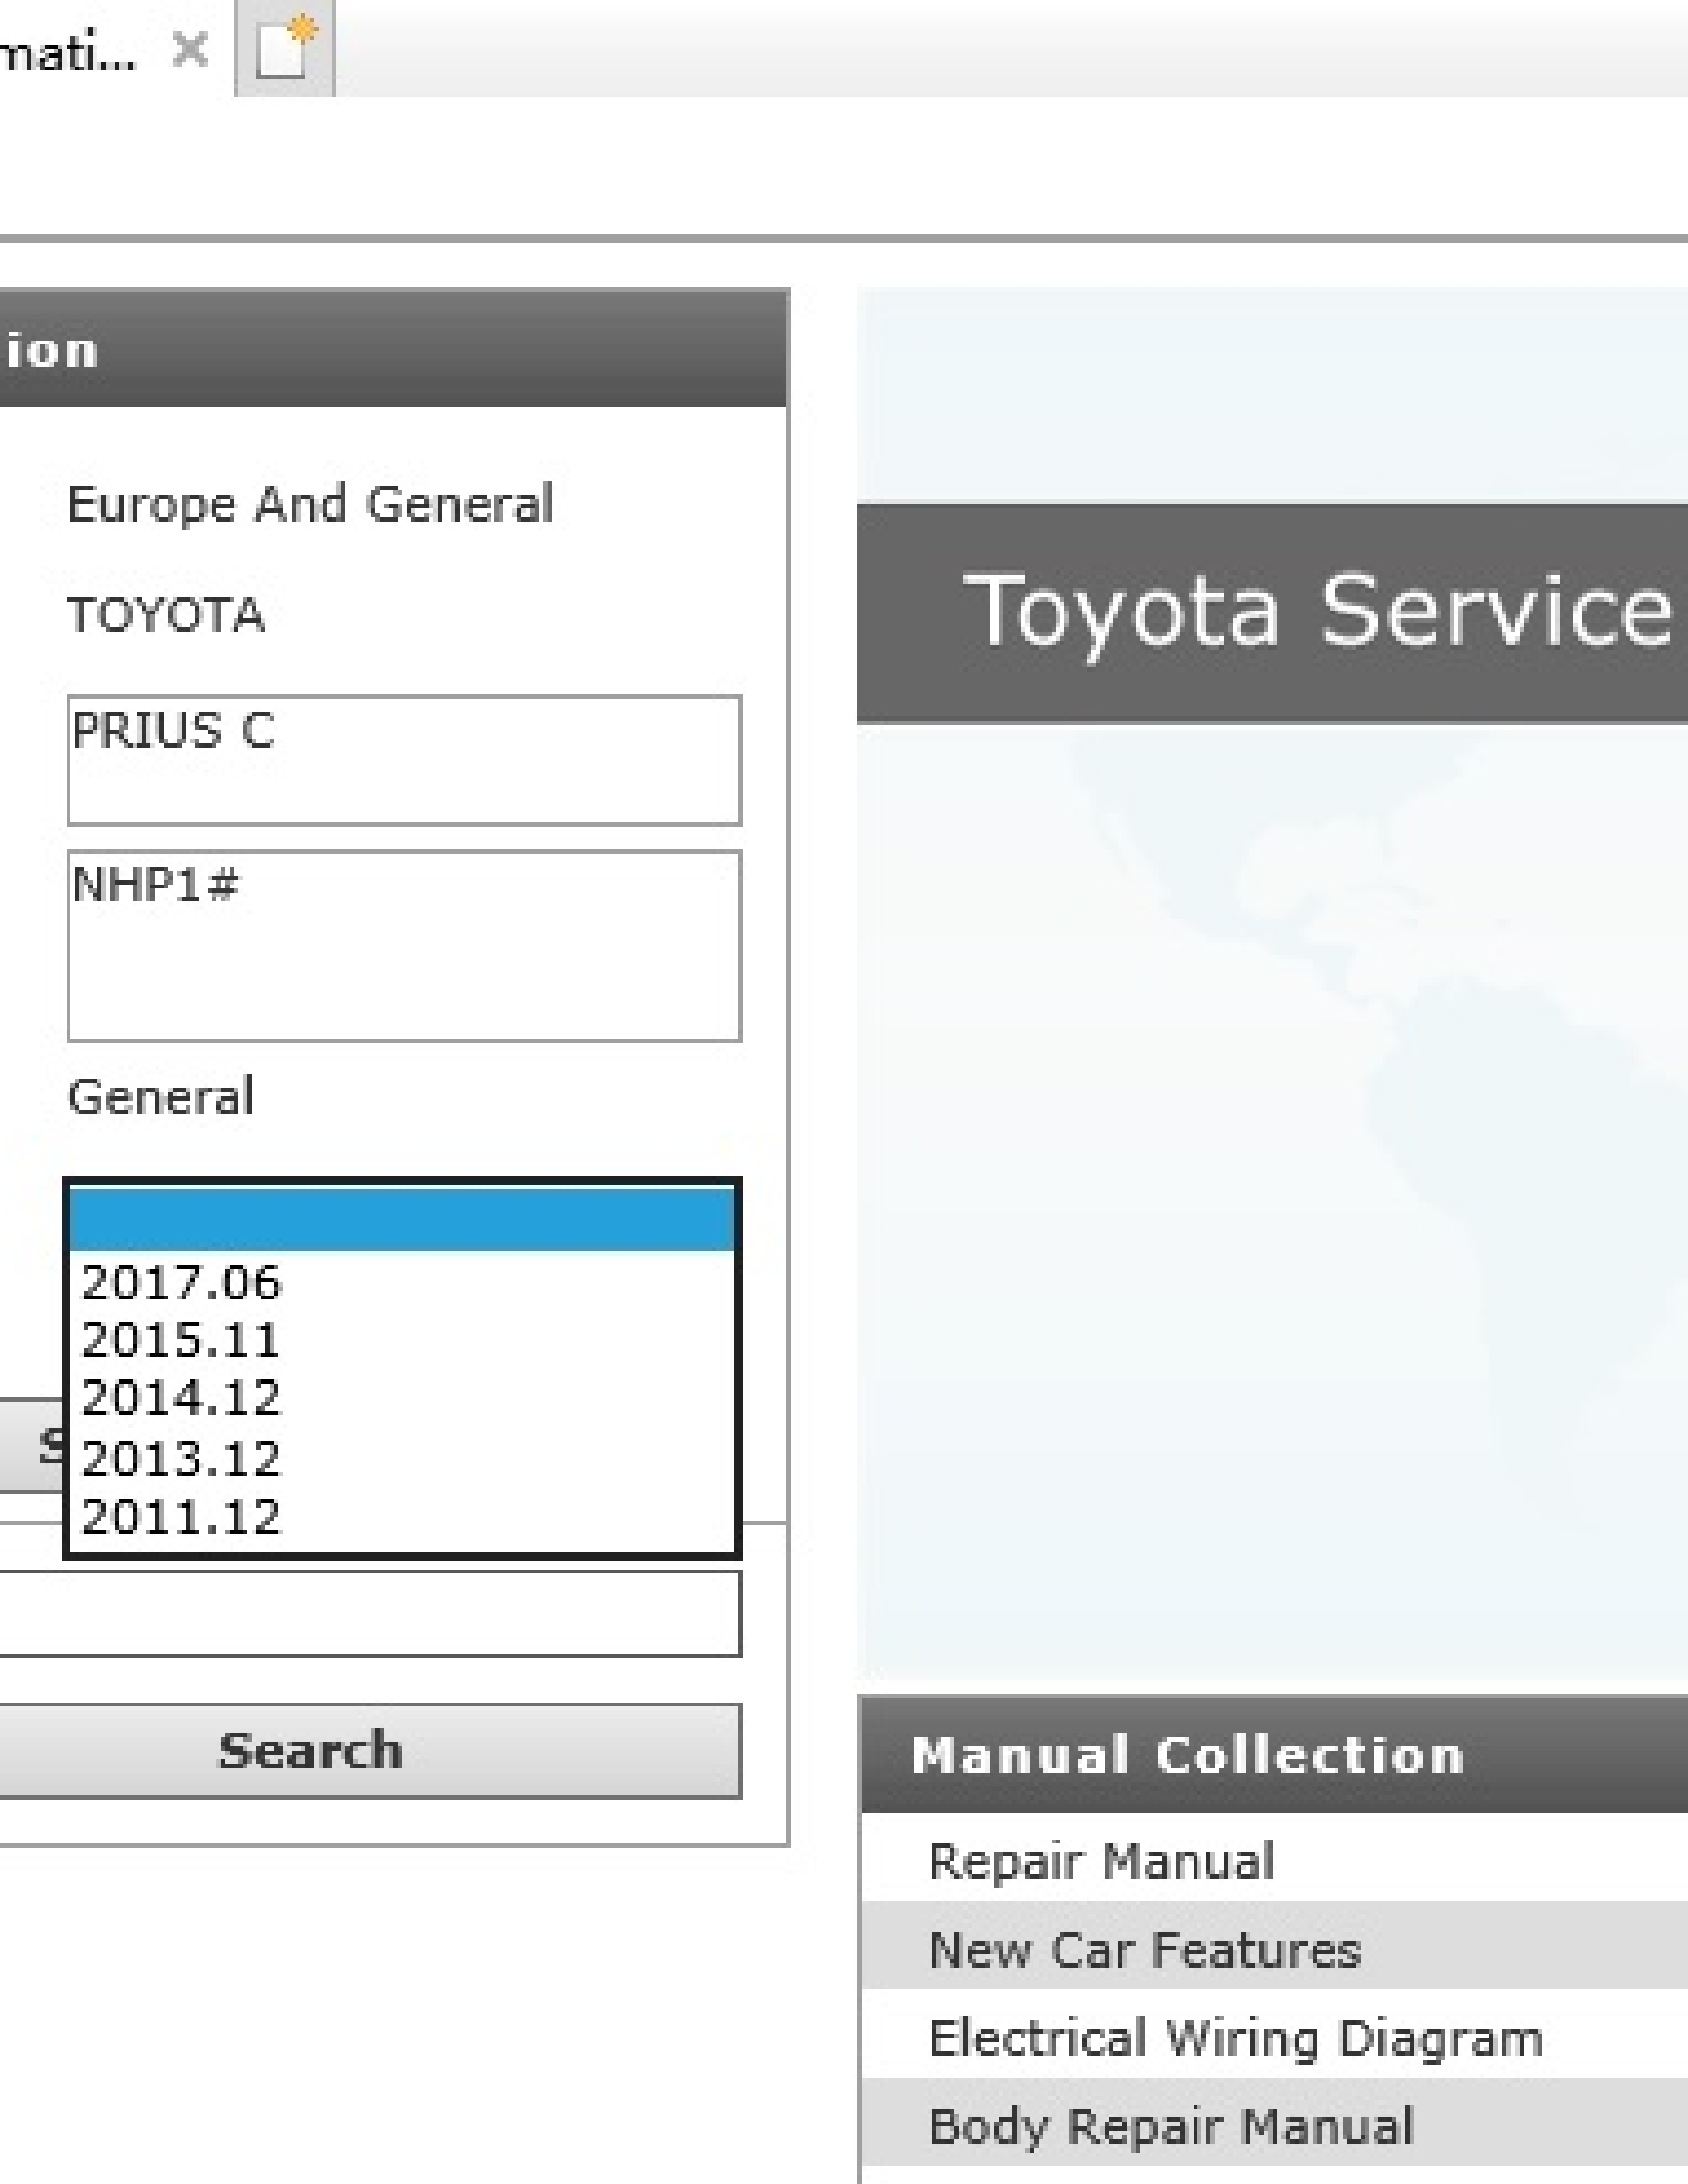 Toyota (NHP1#) PRIUS manual